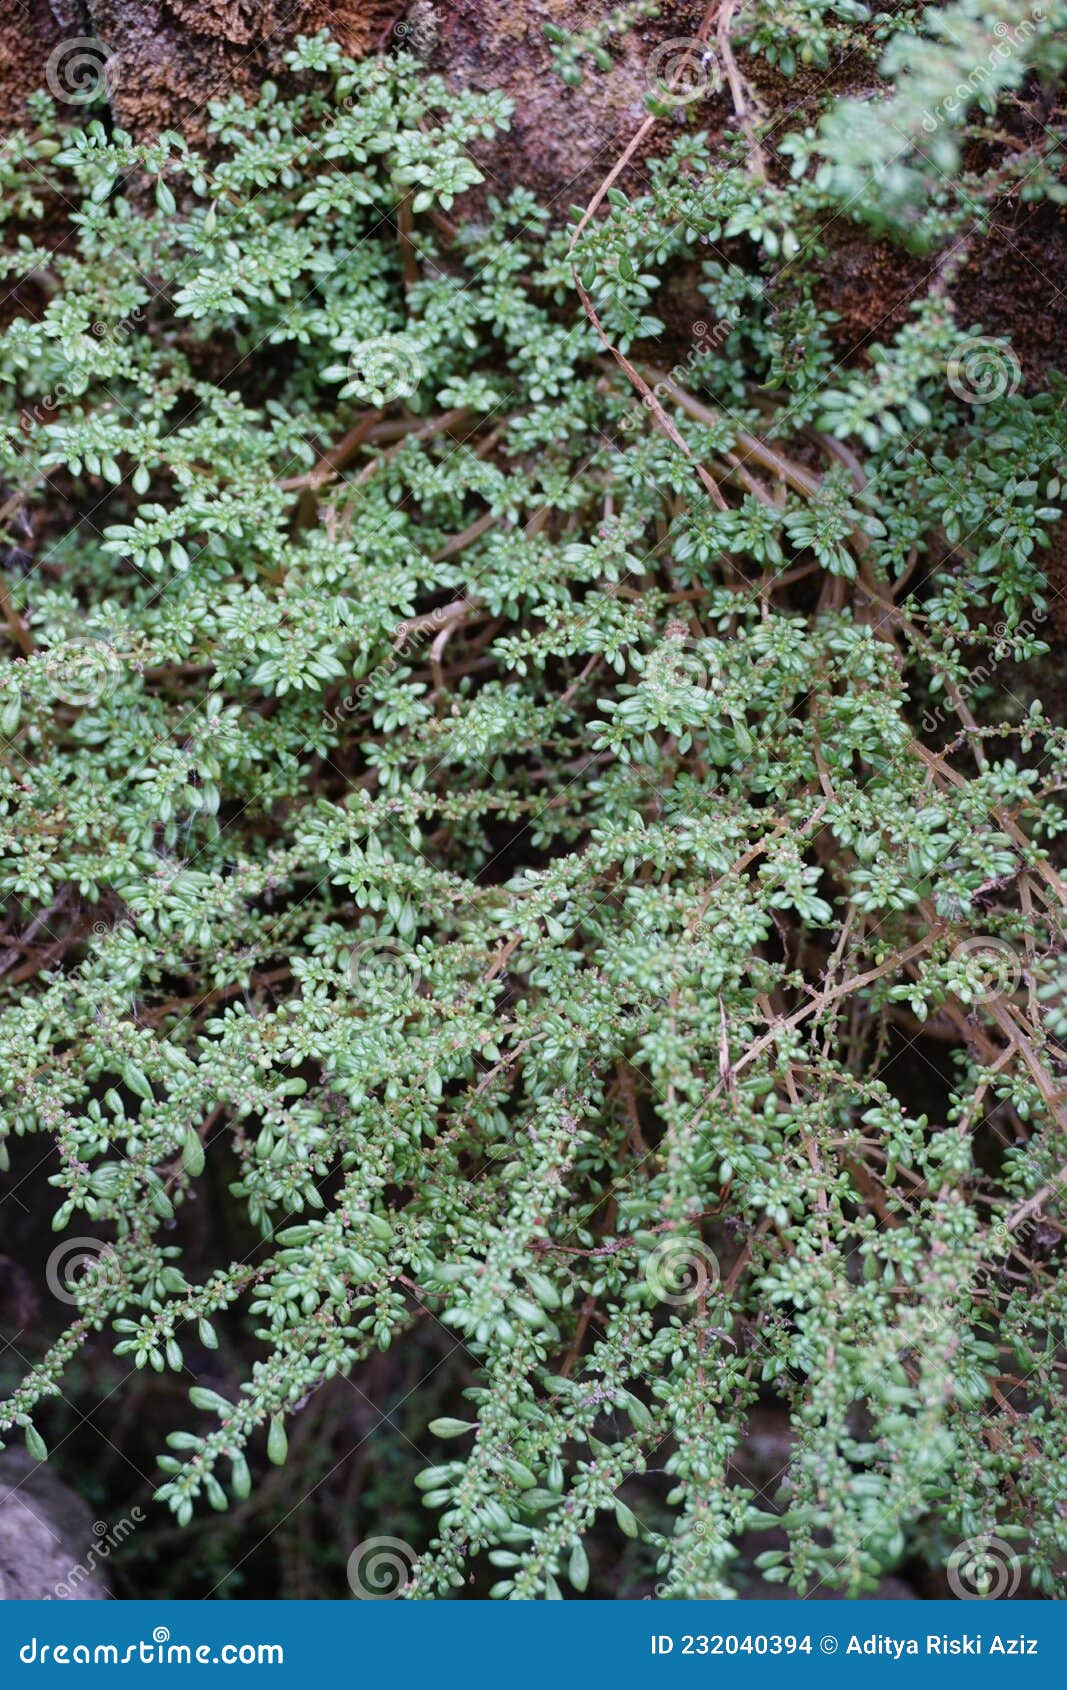 pilea microphylla also called rockweed, artillery plant, gun powder plant, brilhantina, frescura, urticaceae, artillery fern wit